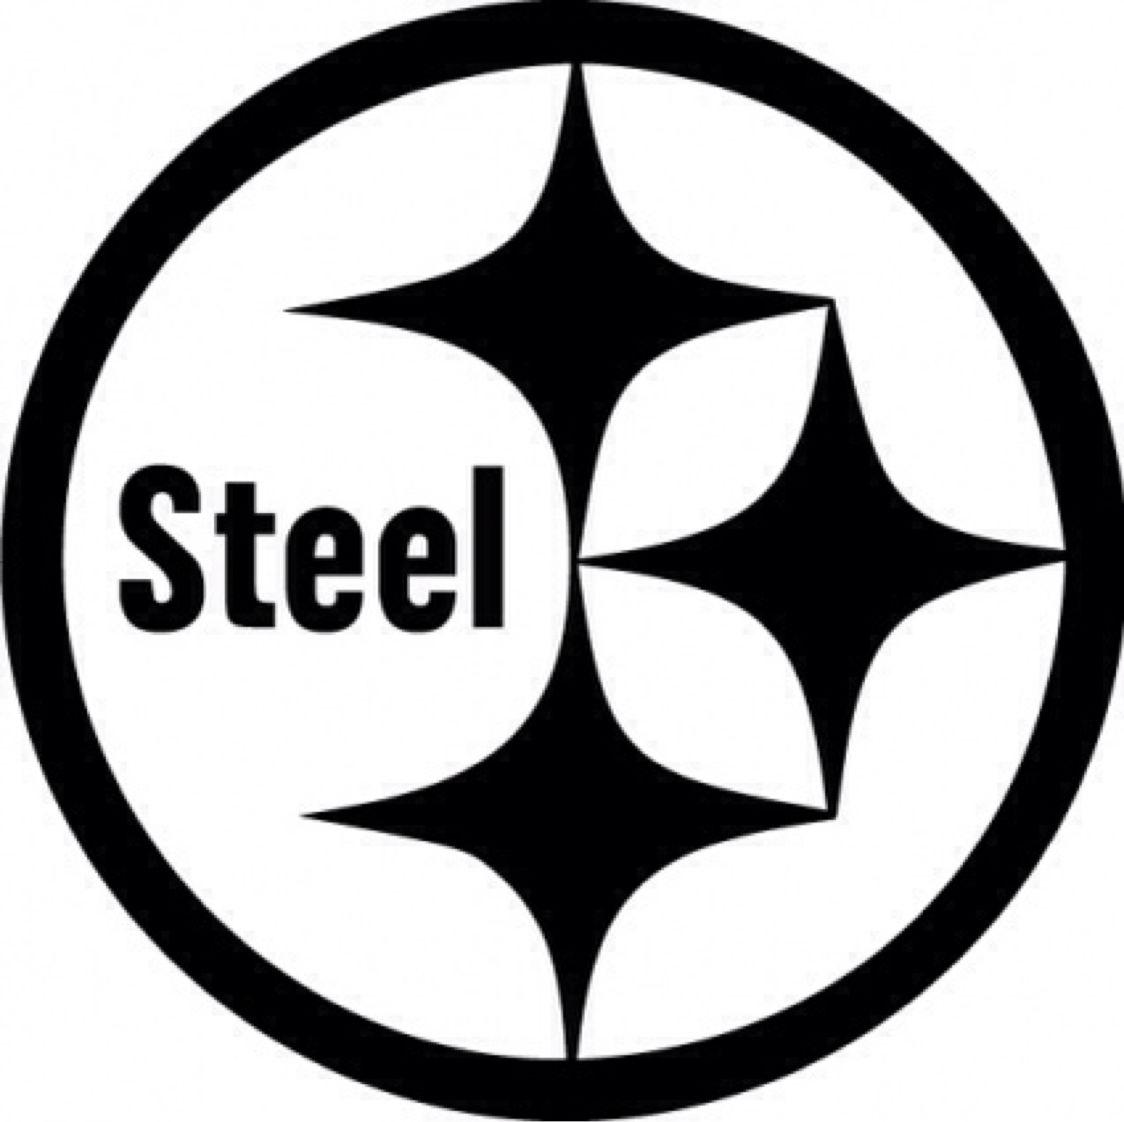 Carnegie Steel Logo - Industrial Revolution Men by Thomas Hidding